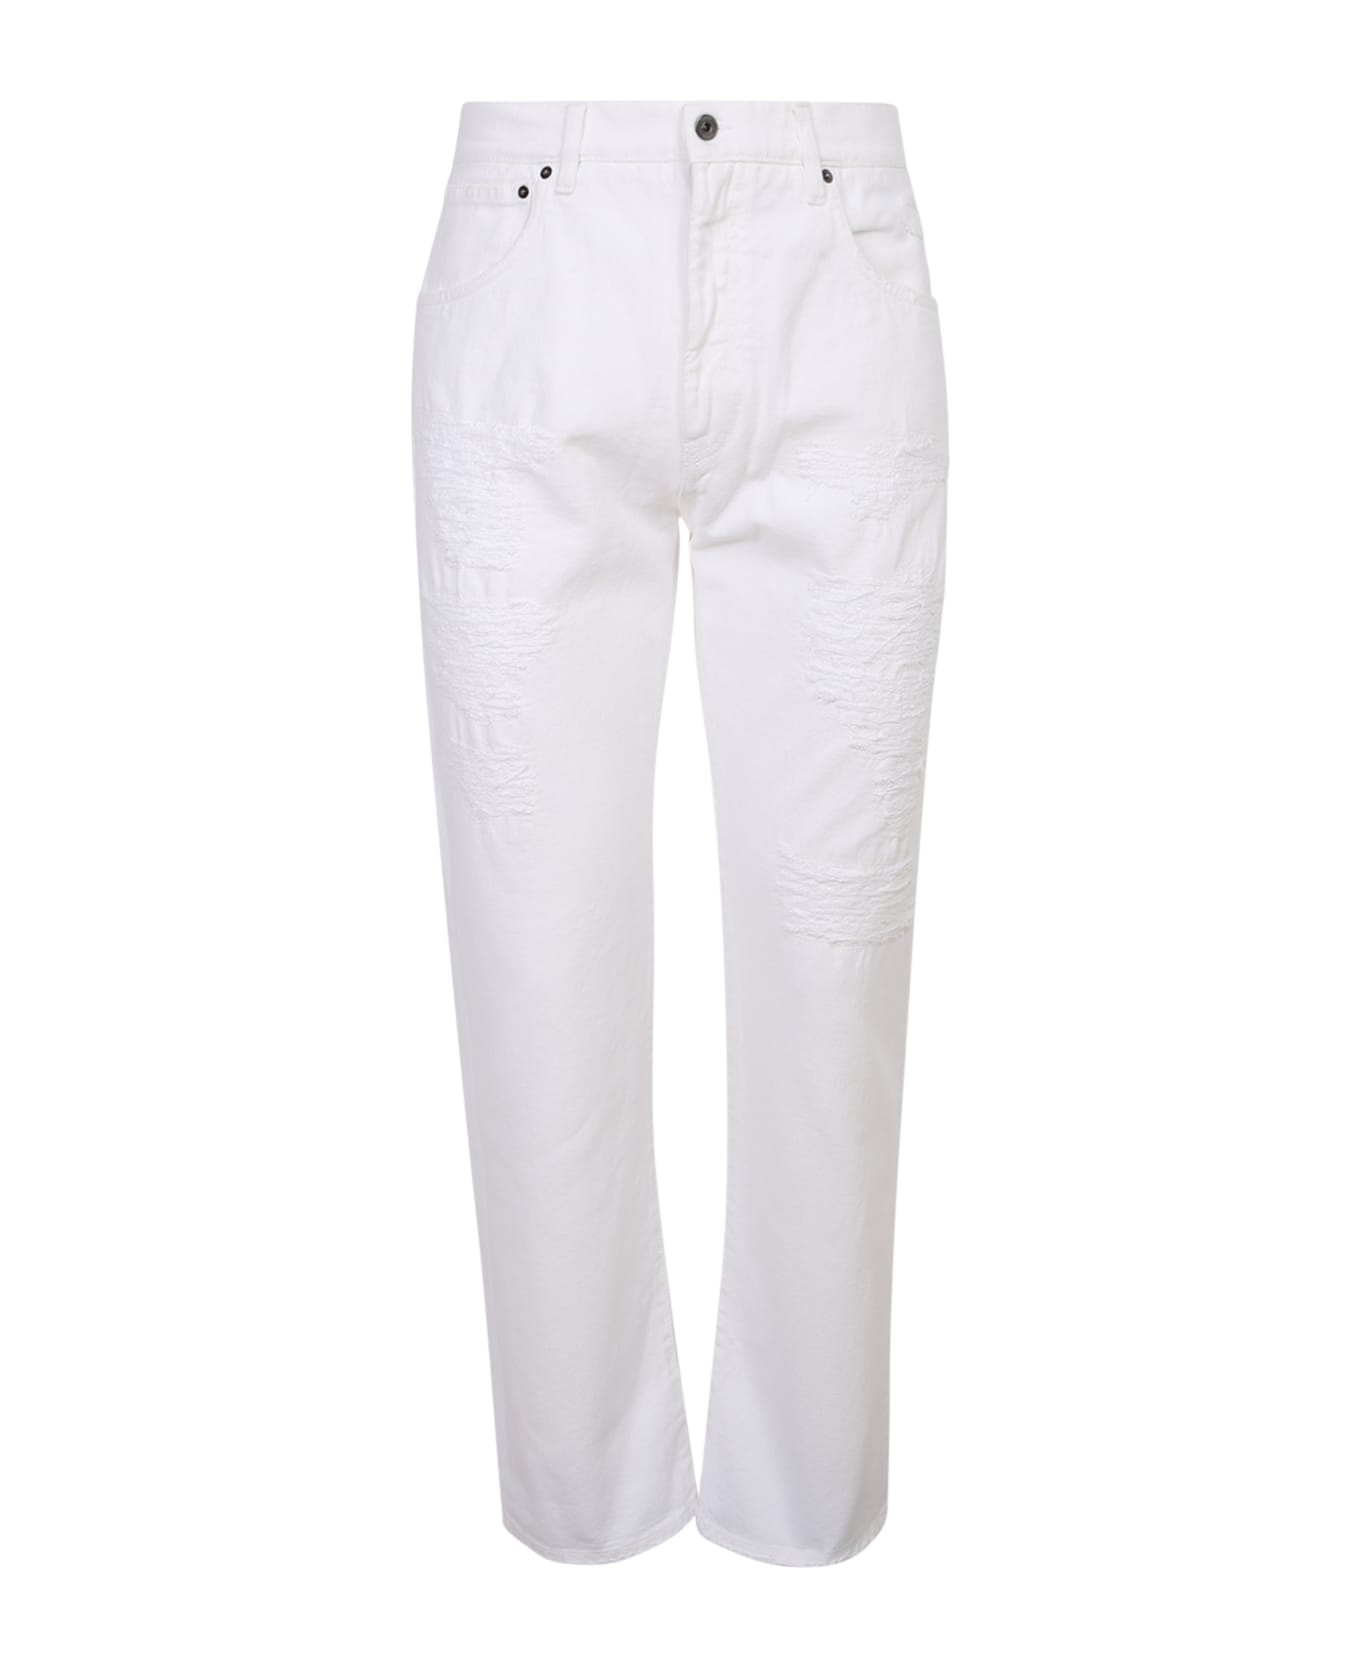 14 Bros Cheswick Straight Jeans - White